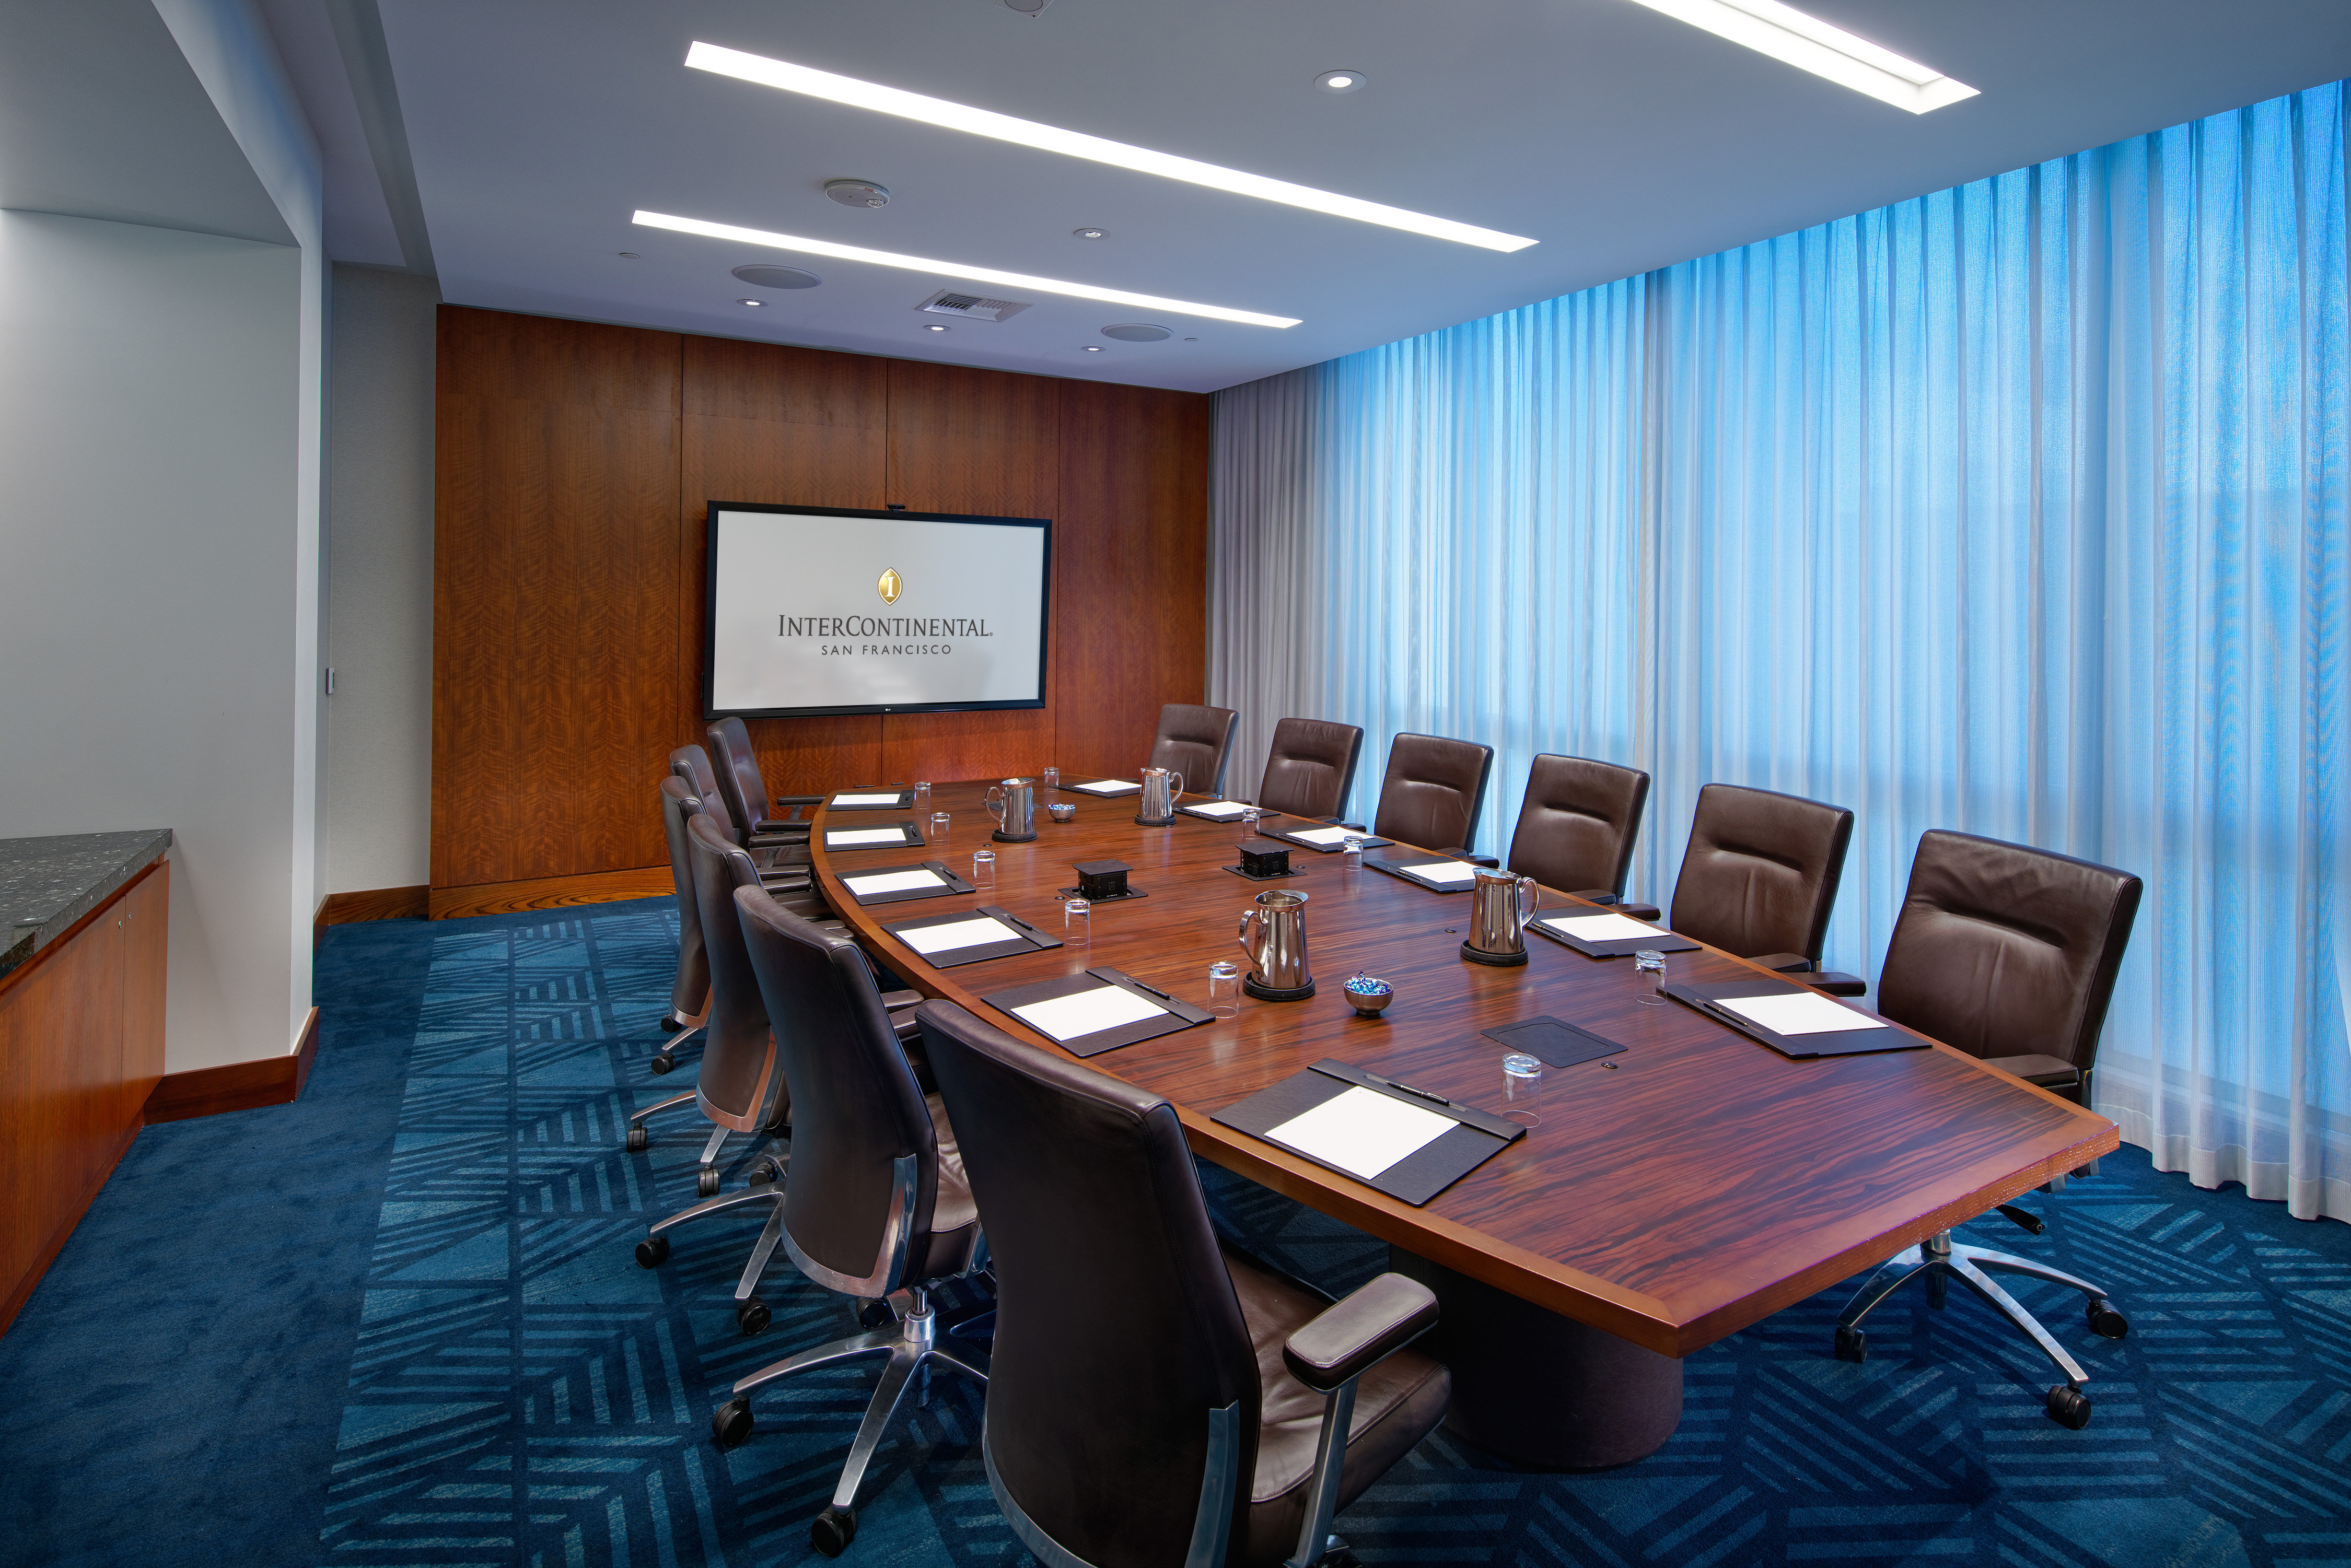 Executive Board Room with high-tech presentation capabilities